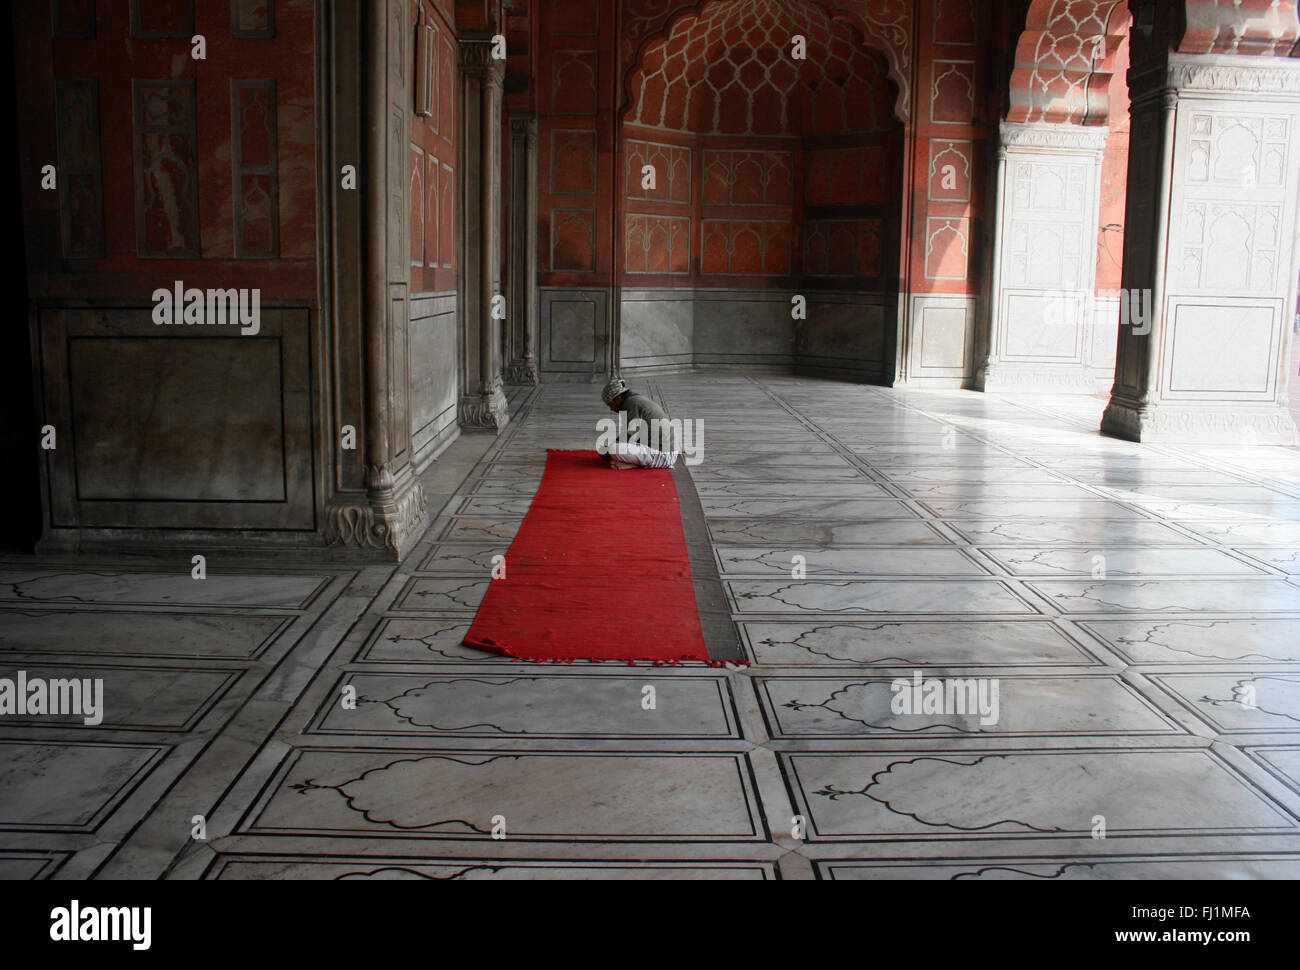 Los musulmanes rezando en Jama Masjid (la gran mezquita) de Vieja Delhi, India Foto de stock